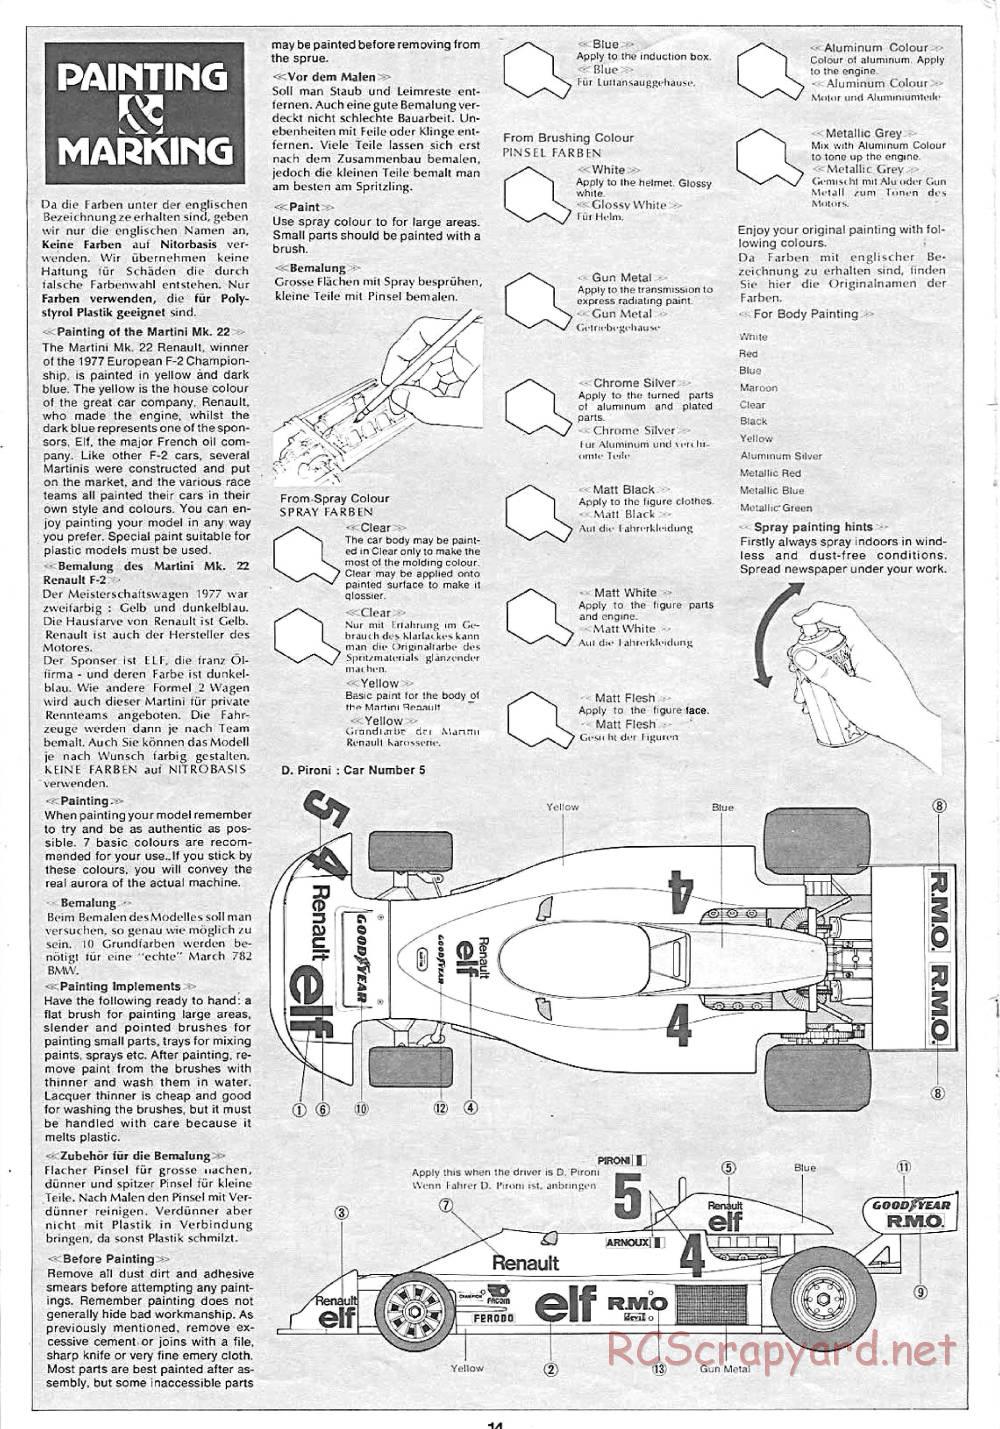 Tamiya - Martini Mk22 Renault (F2) - 58014 - Manual - Page 14